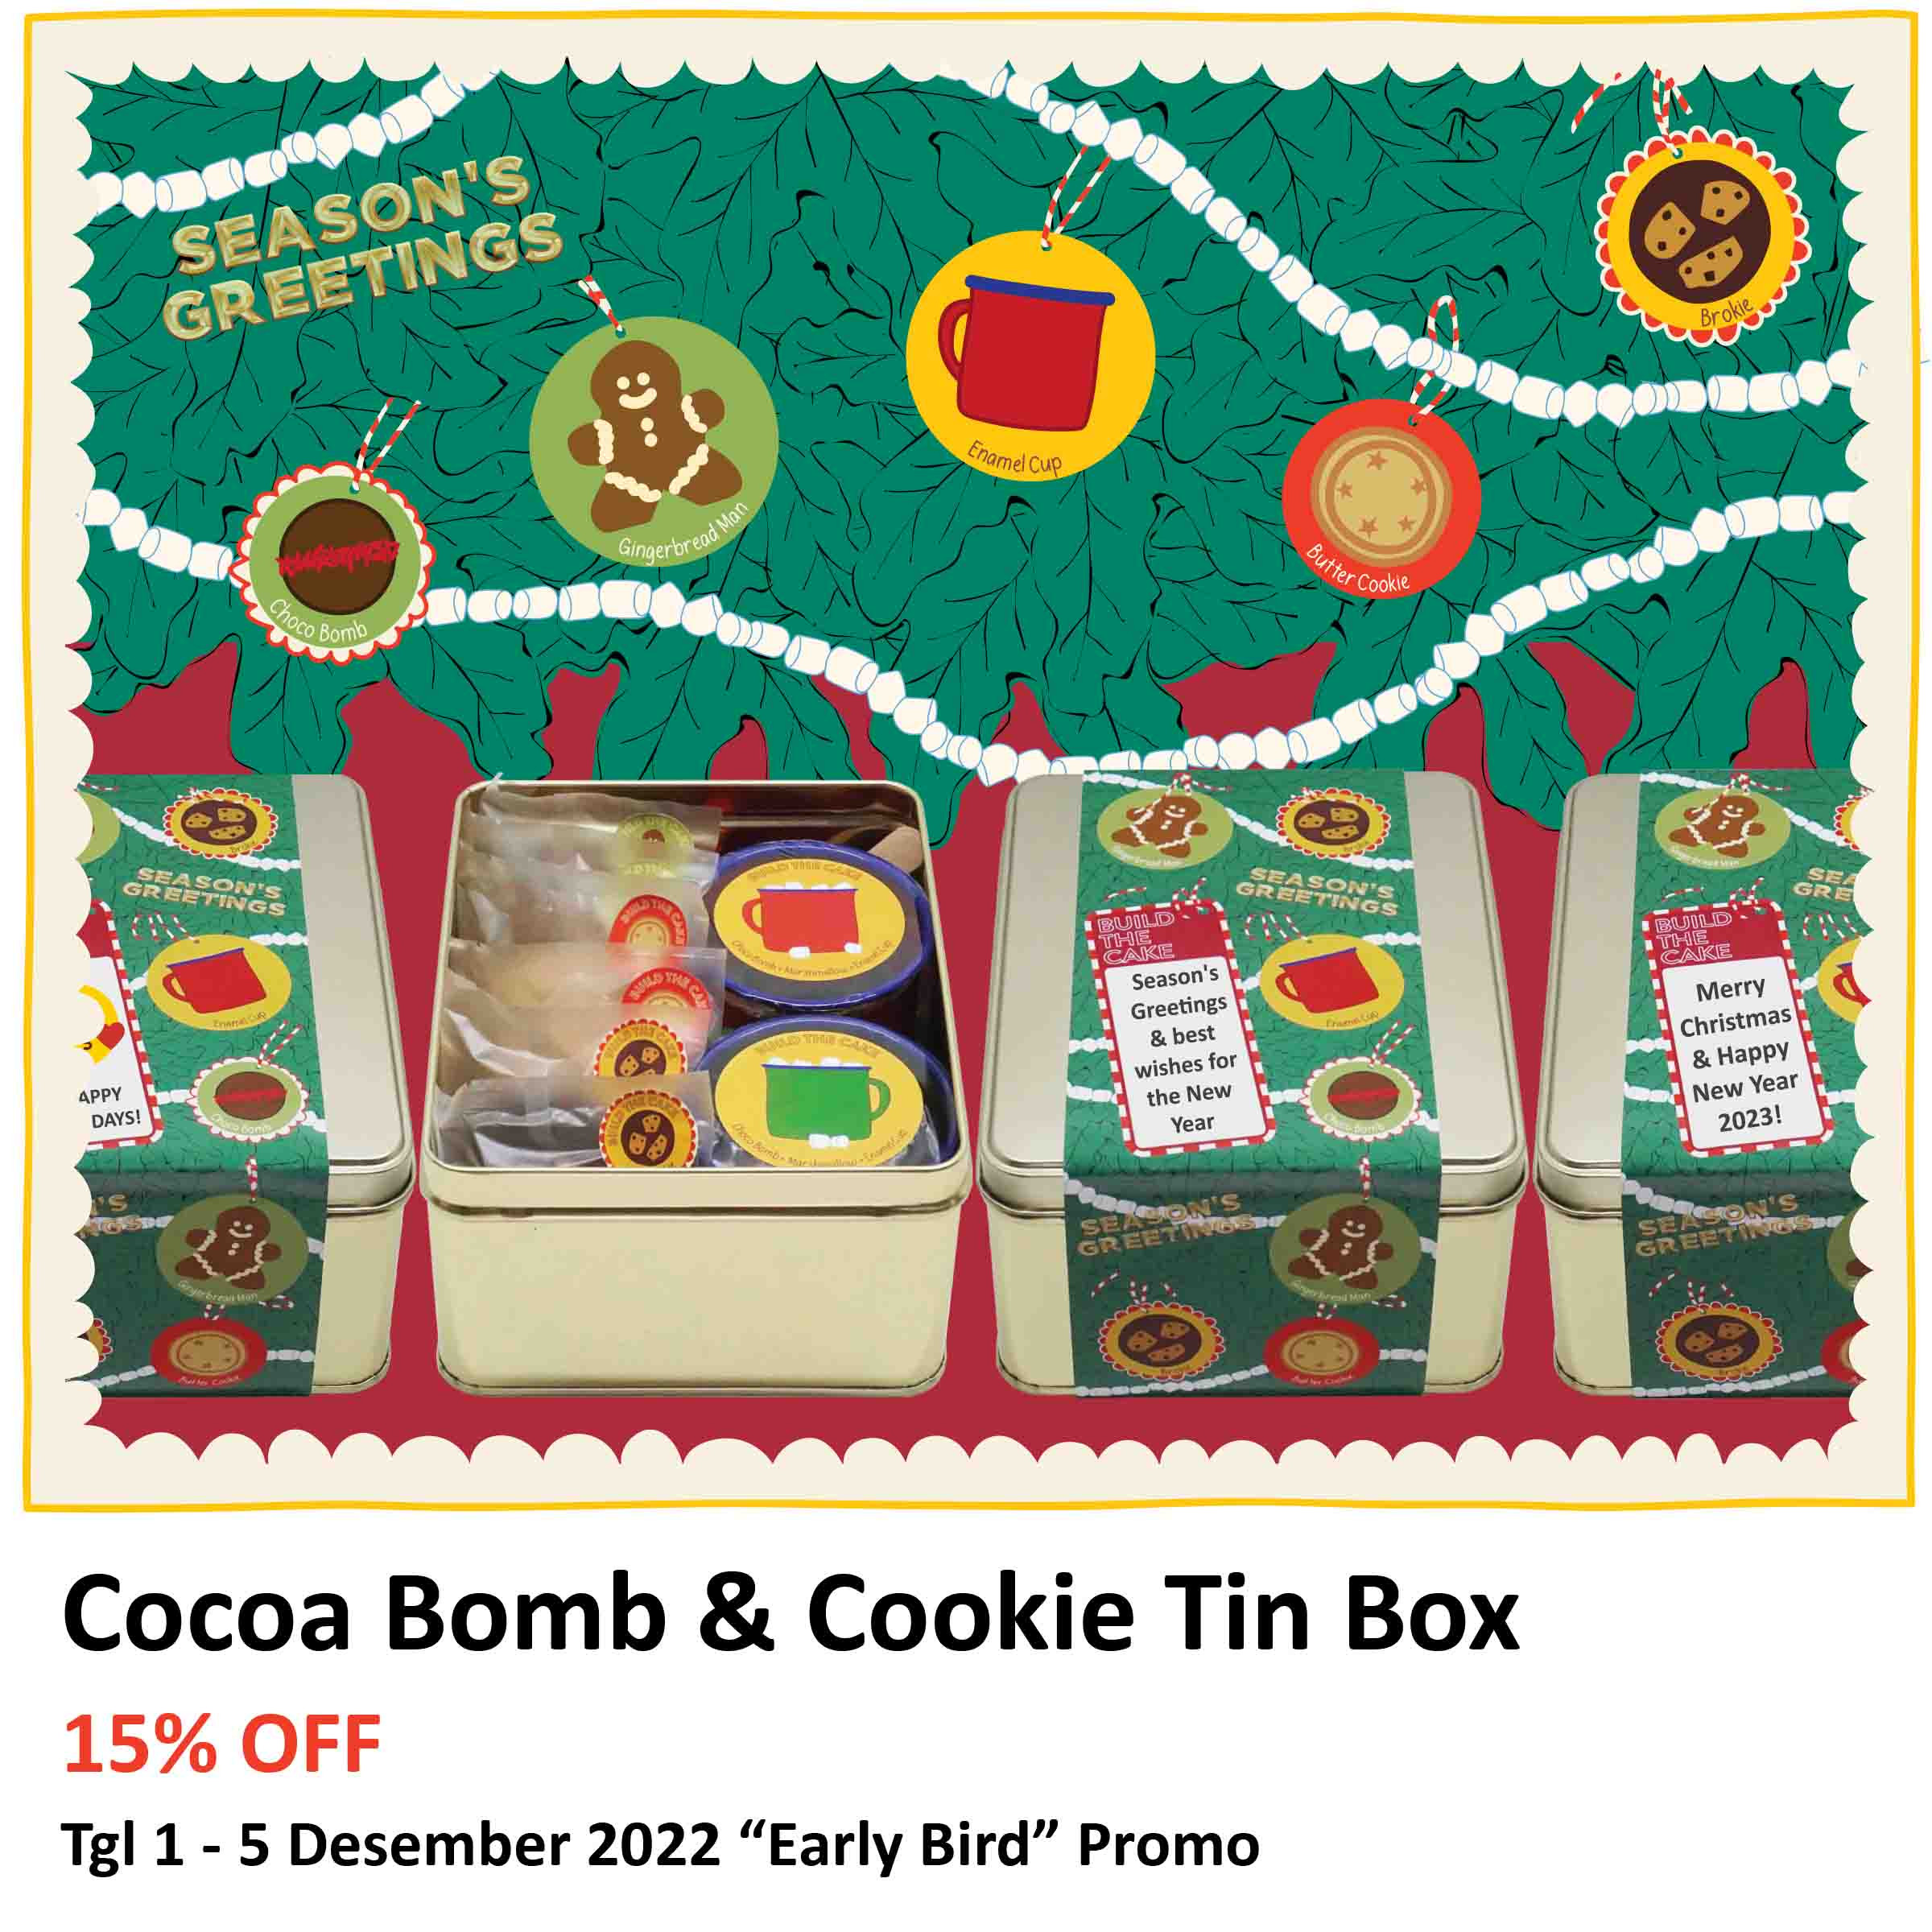 Cocoa Bomb & Cookie Tin Box